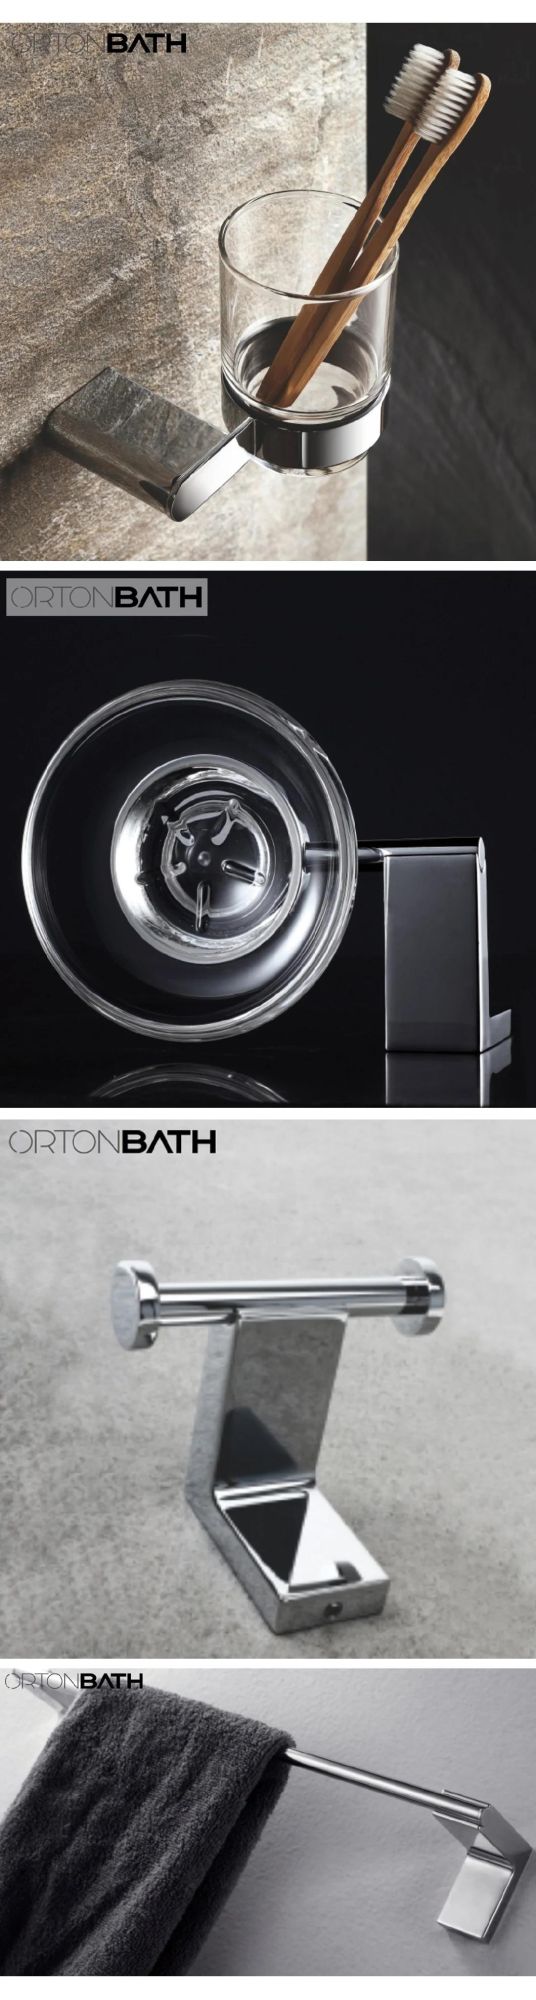 Ortonbath 7 Pieces Bathroom Hardware Set Hand Towel Bar, Towel Ring, Toilet Paper Holder, Su304 Stainless Steel Towel Rack Set, Bathroom Accessories Kit